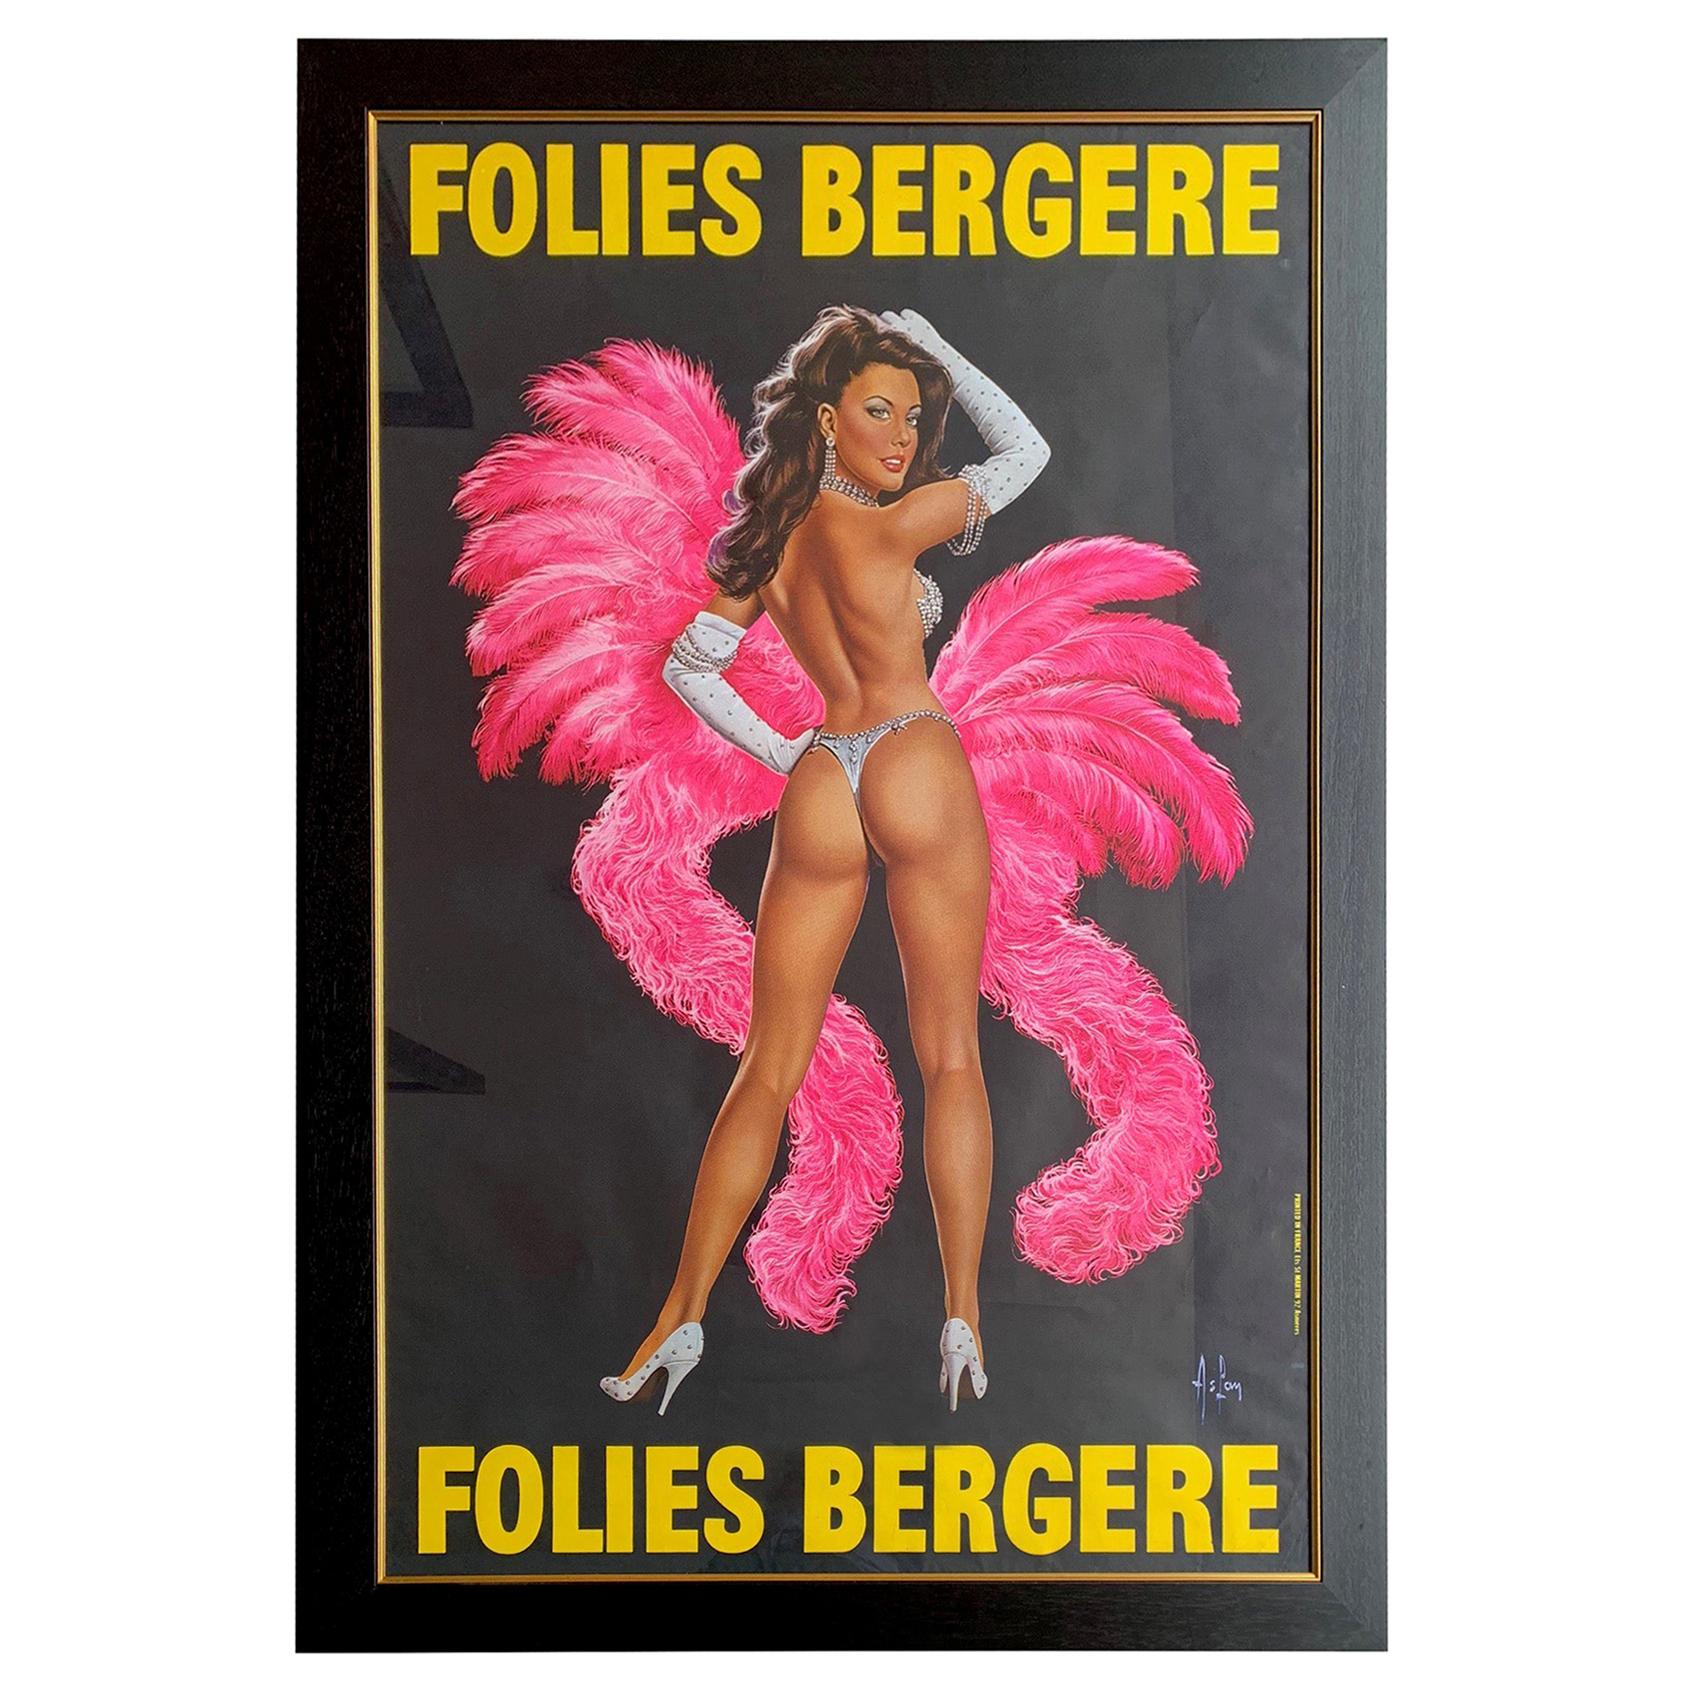 Original 1950s Large Folies Bergere Poster by Alain Gourdon Aka Aslan